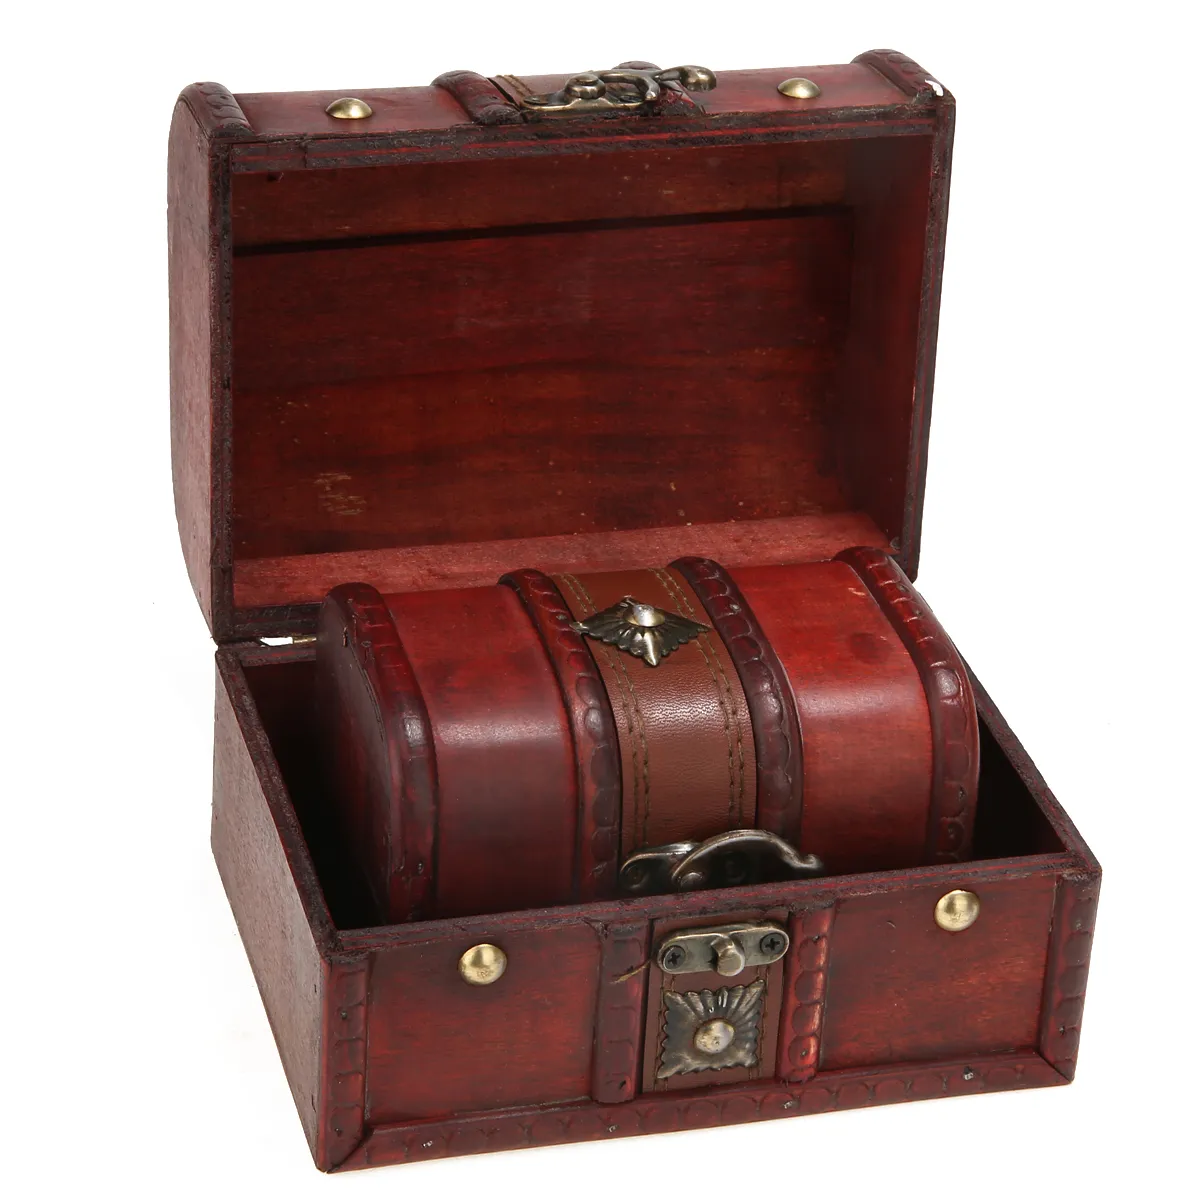 2st Vintage Wood Case Jewelry Storage Box Liten Treasure Chest Wood Crate Case Home Lagringslådor 2103158052215